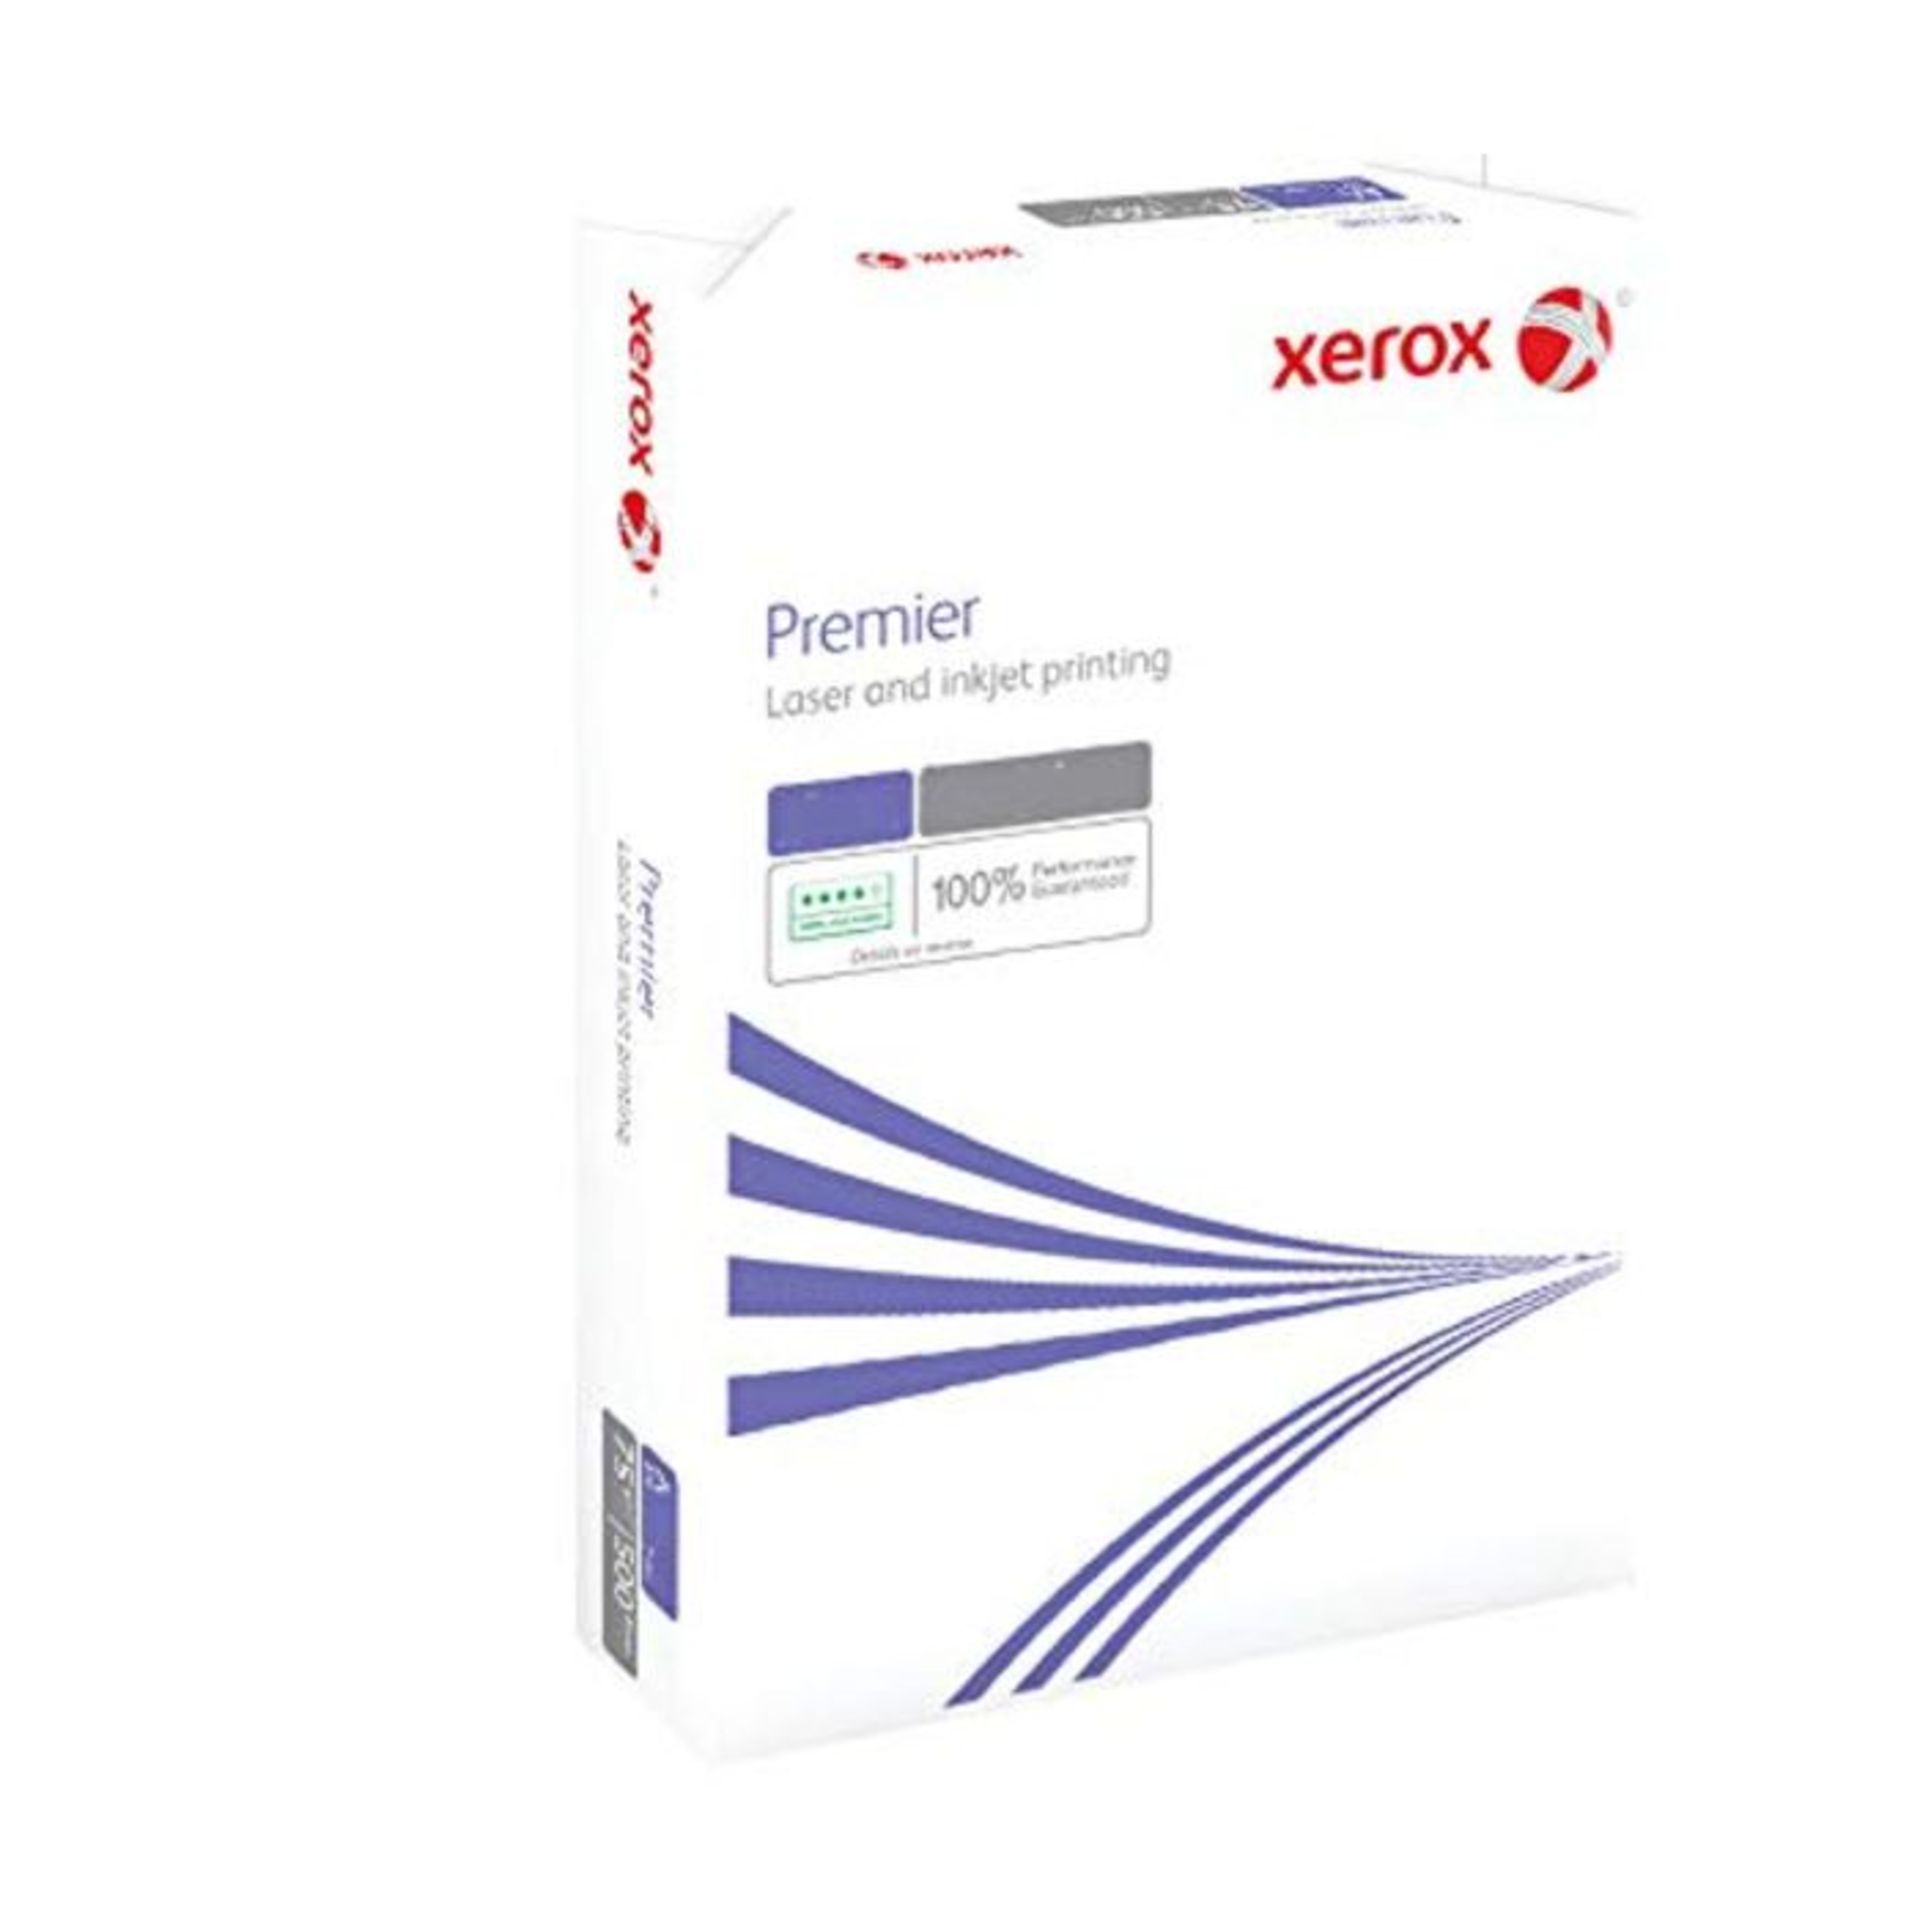 Xerox Premier Copier Card 160gsm A4 White Ref 003R93009 [250 Sheets]